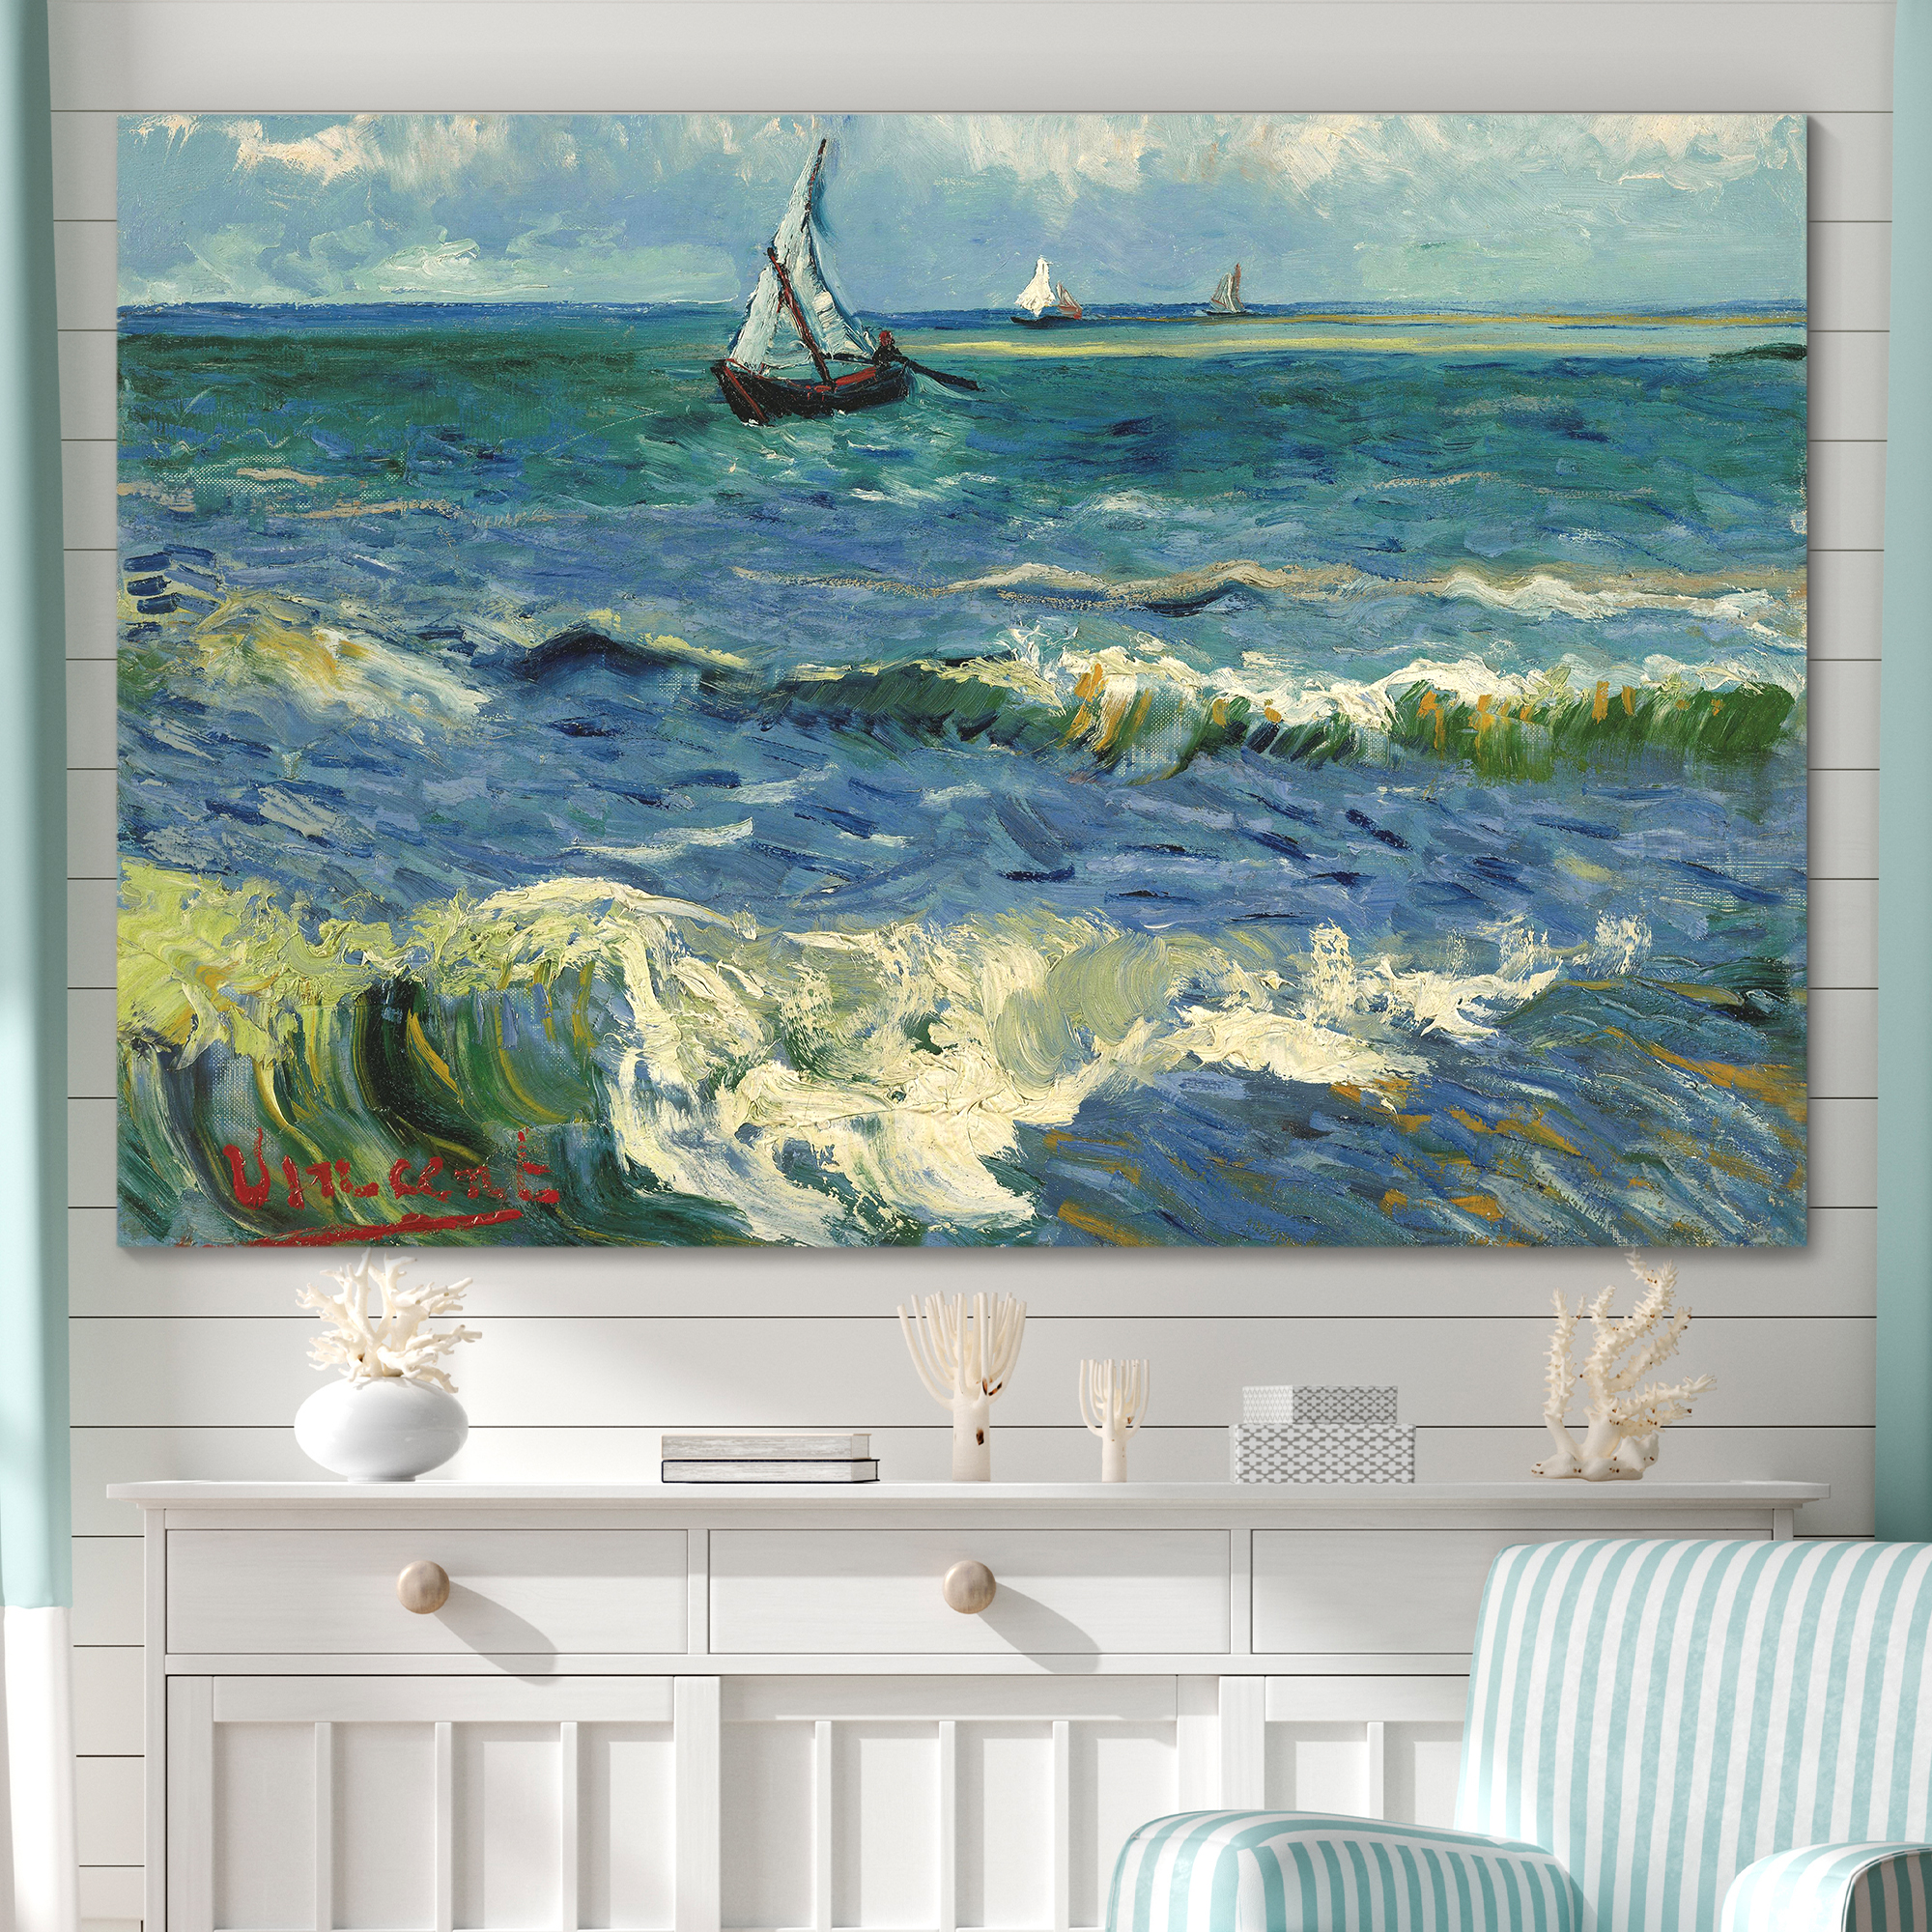 Seascape near Les Saintes Maries De La Mer by Vincent Van Gogh - Oil Painting Reproduction on Canvas Prints Wall Art, Ready to Hang - 24